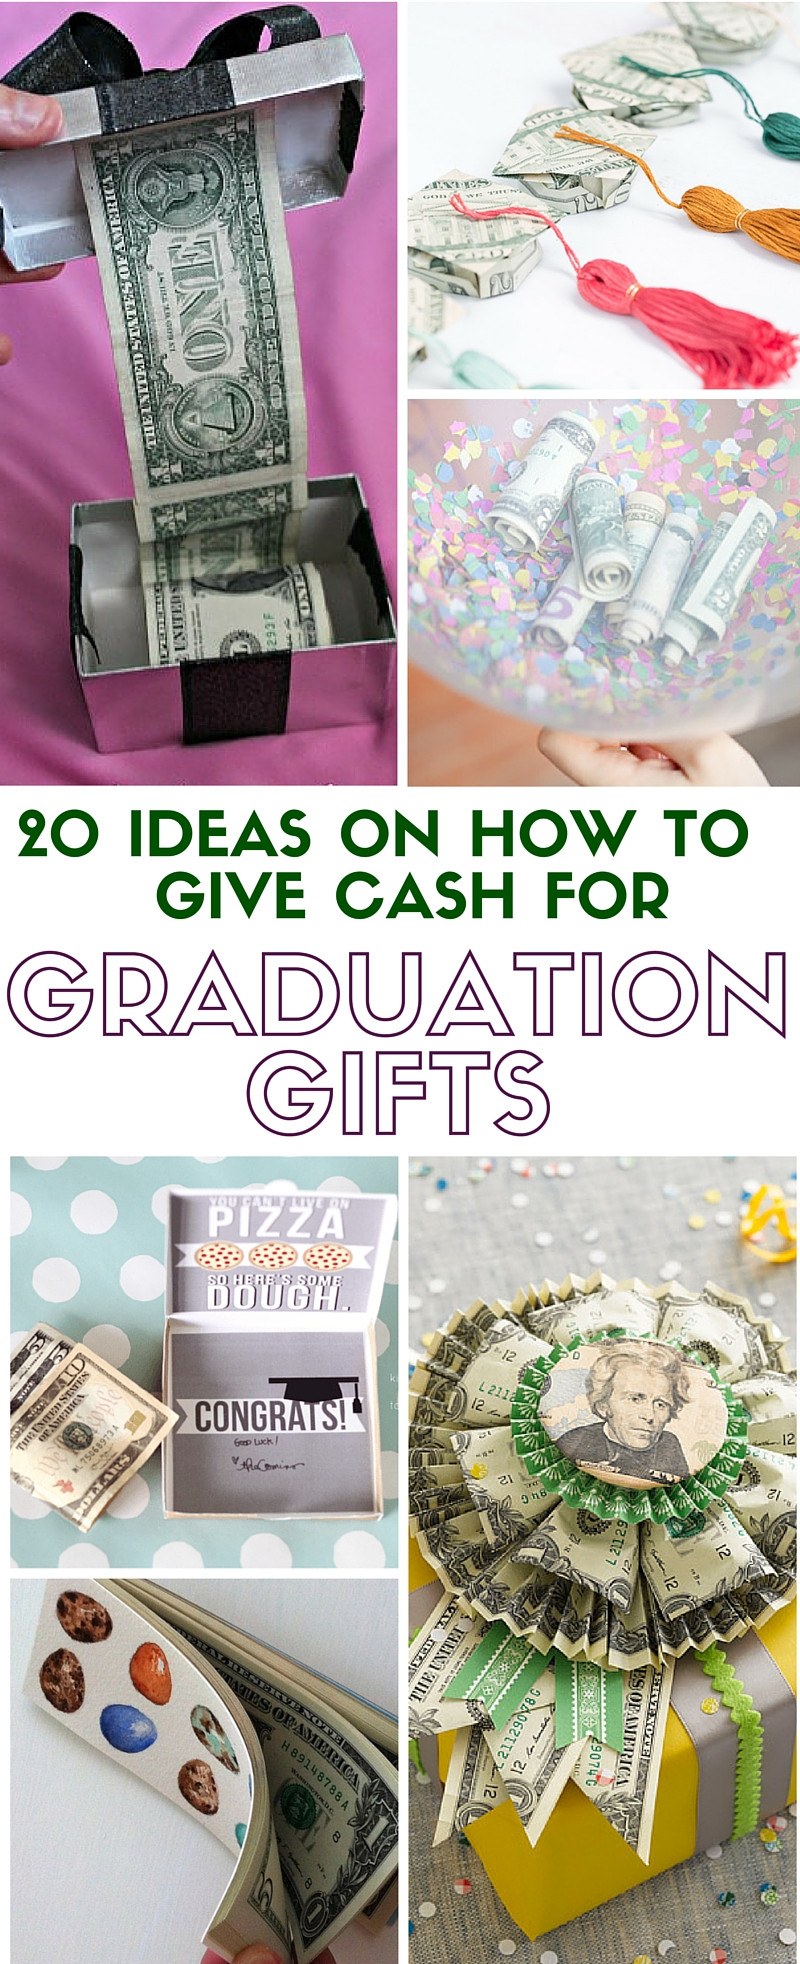 Great College Graduation Gift Ideas
 31 Back To School Teacher Gift Ideas The Crafty Blog Stalker